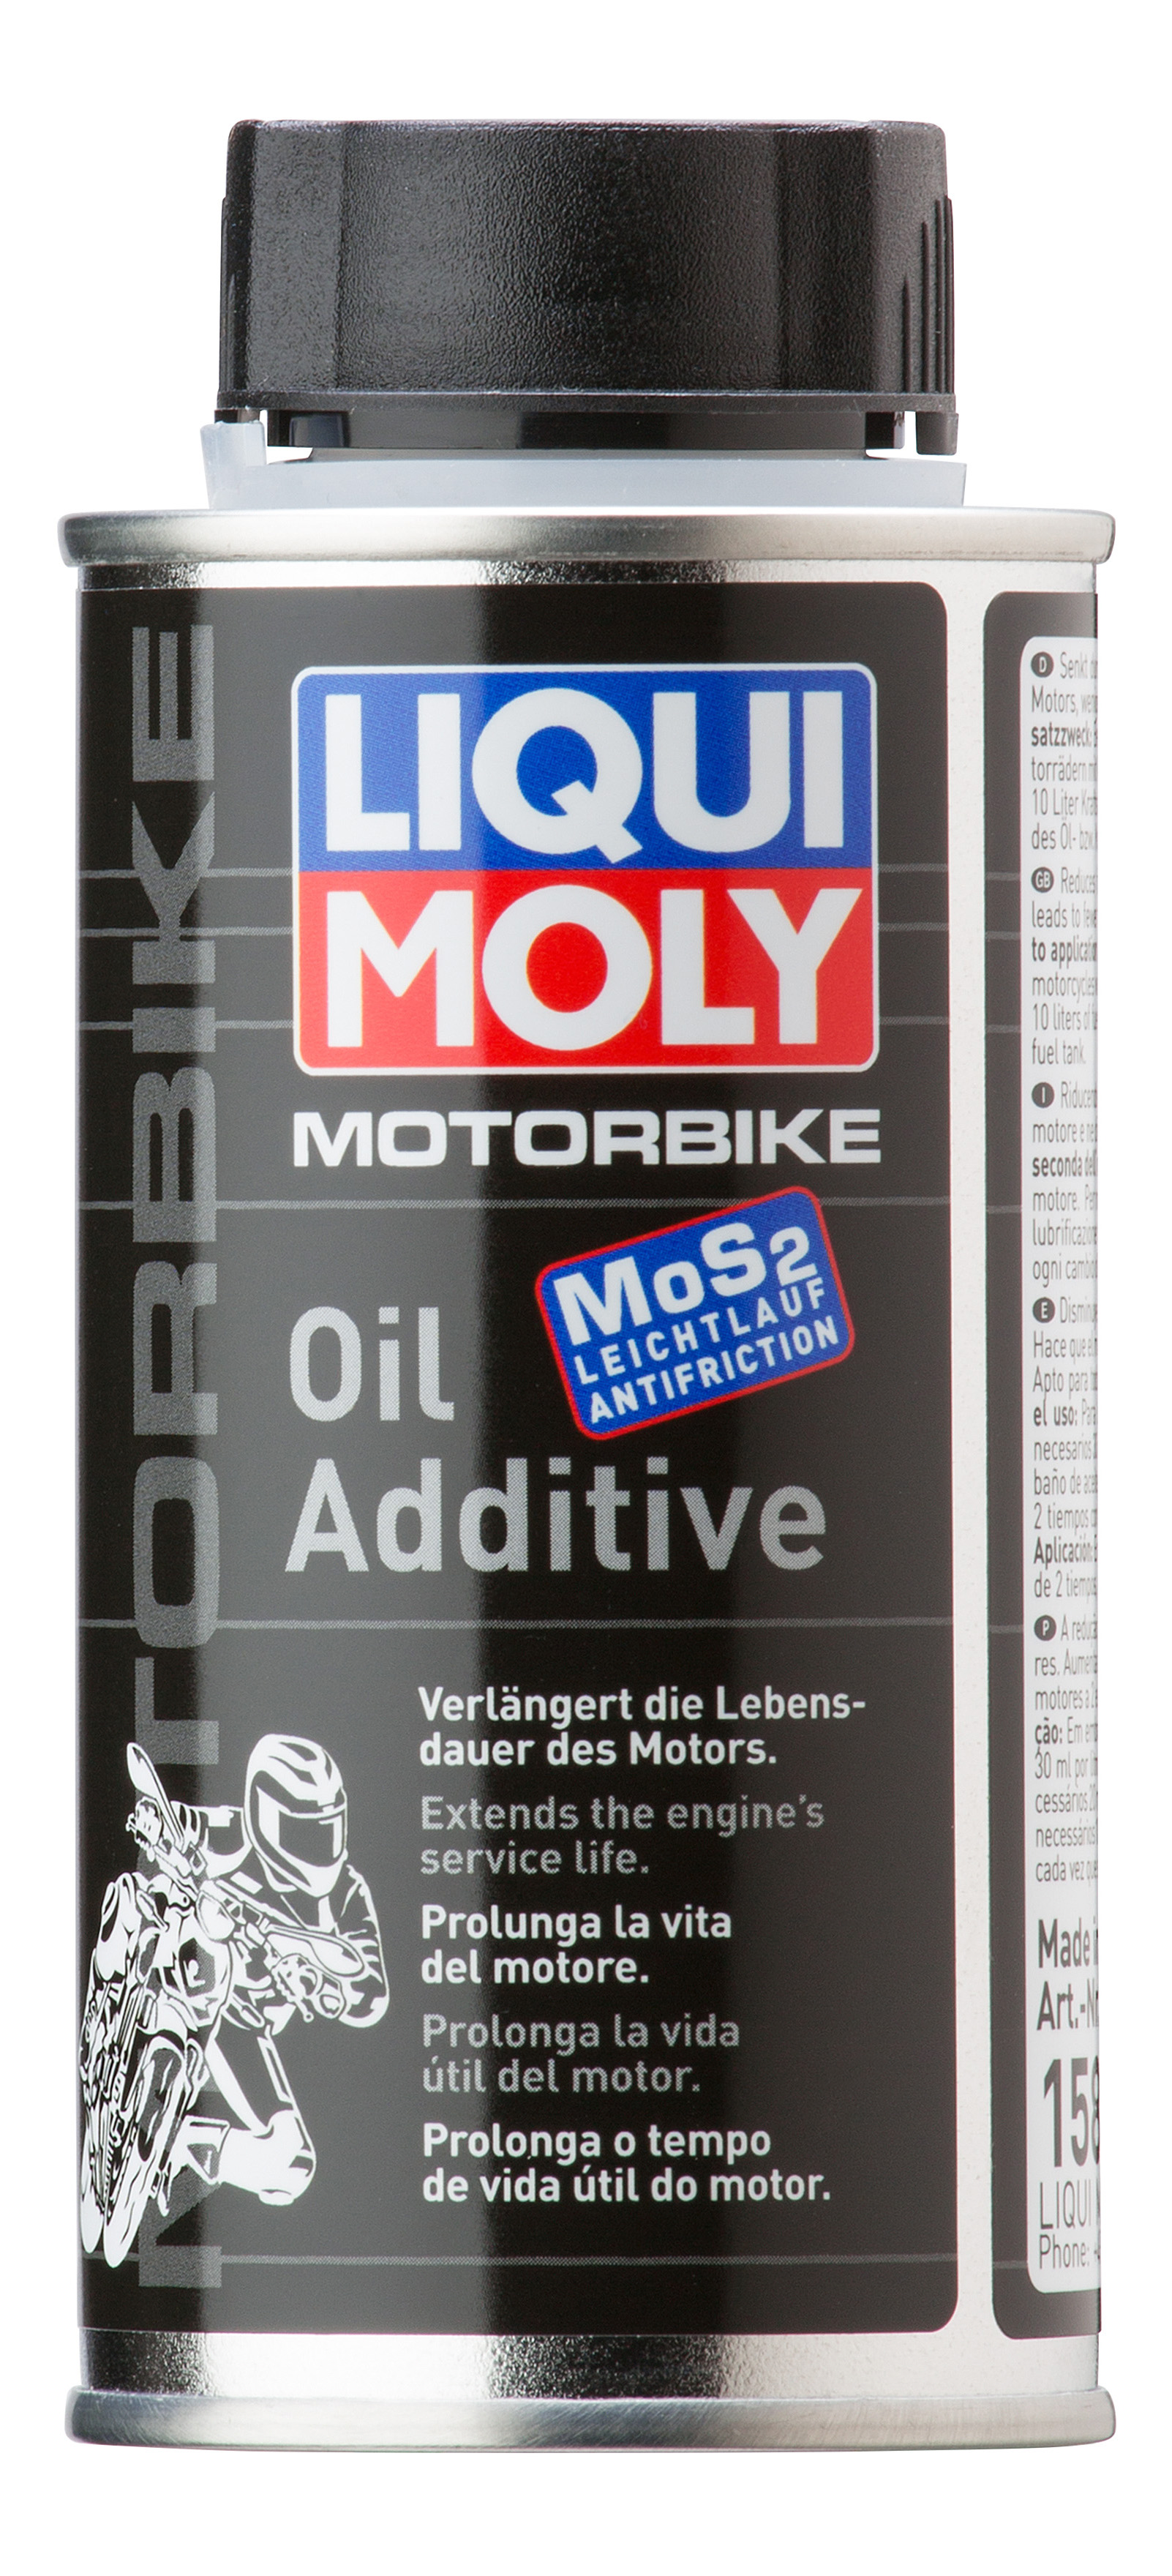 фото Антифрикционная присадка в масло для мотоциклов motorbike oil additiv liqui moly